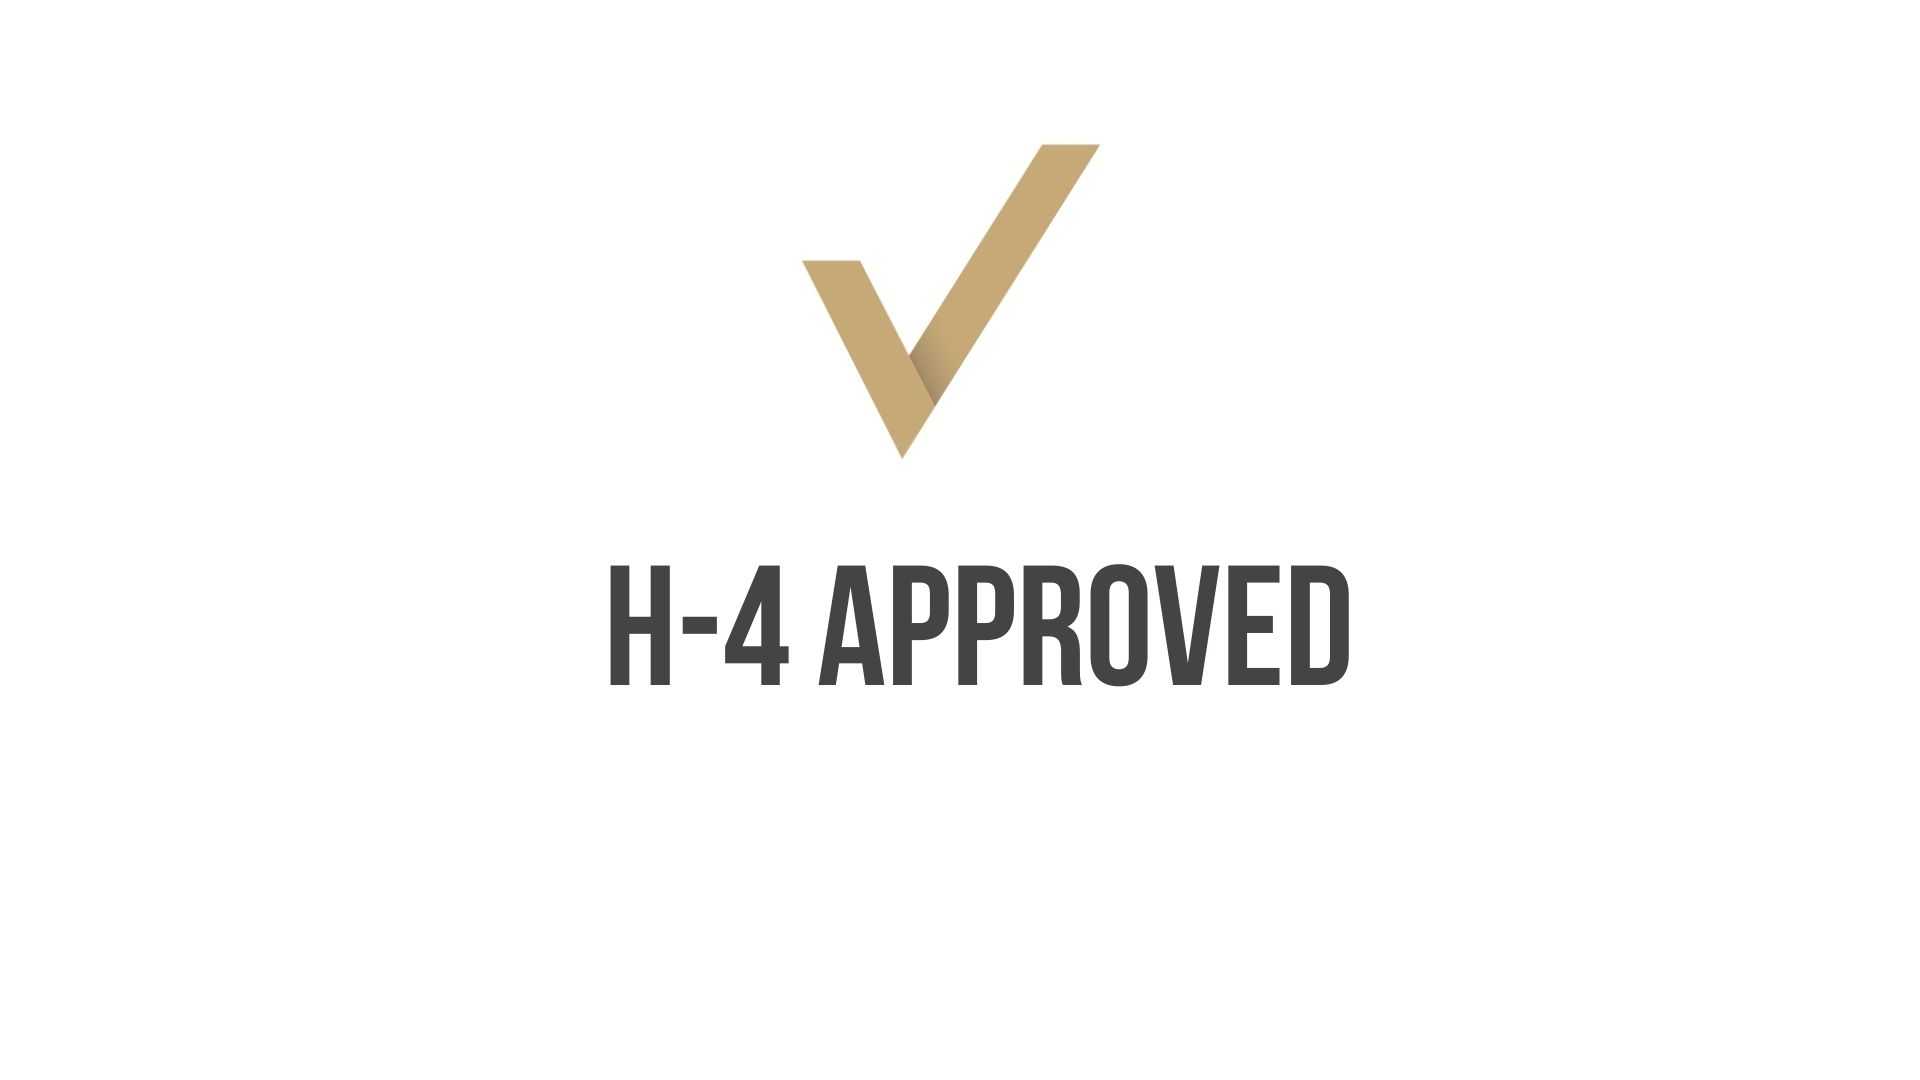 H-4 Approval for Spouse of H-1B Visa Holder